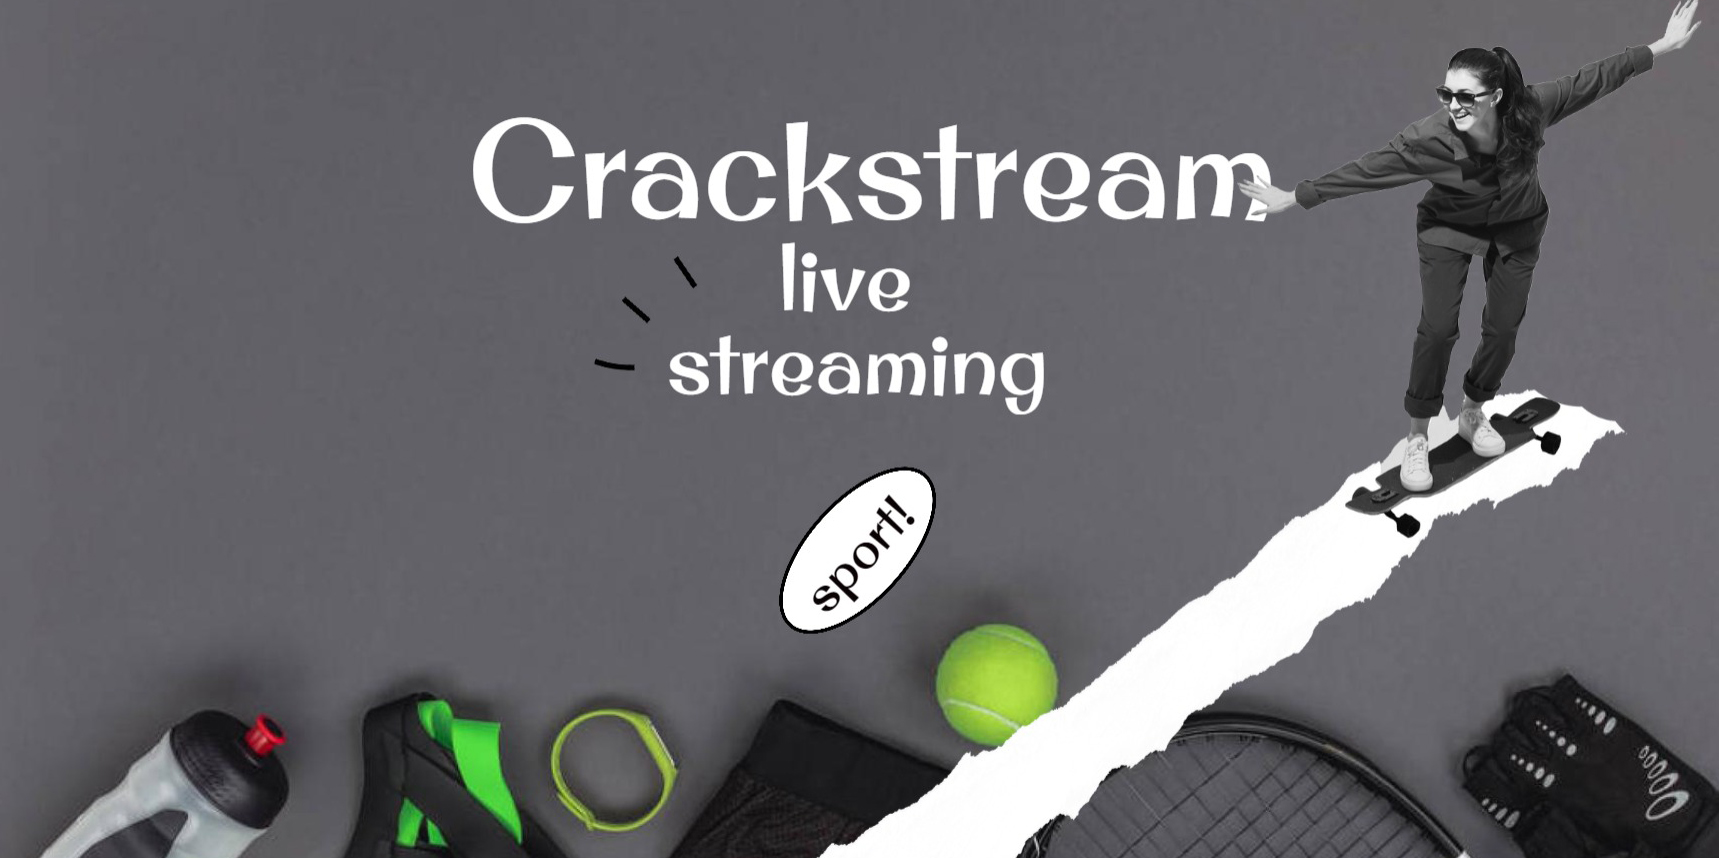 Crackstream: NBA, NFL, MLB, MMA, UFC Live-Streaming kostenlos ansehen